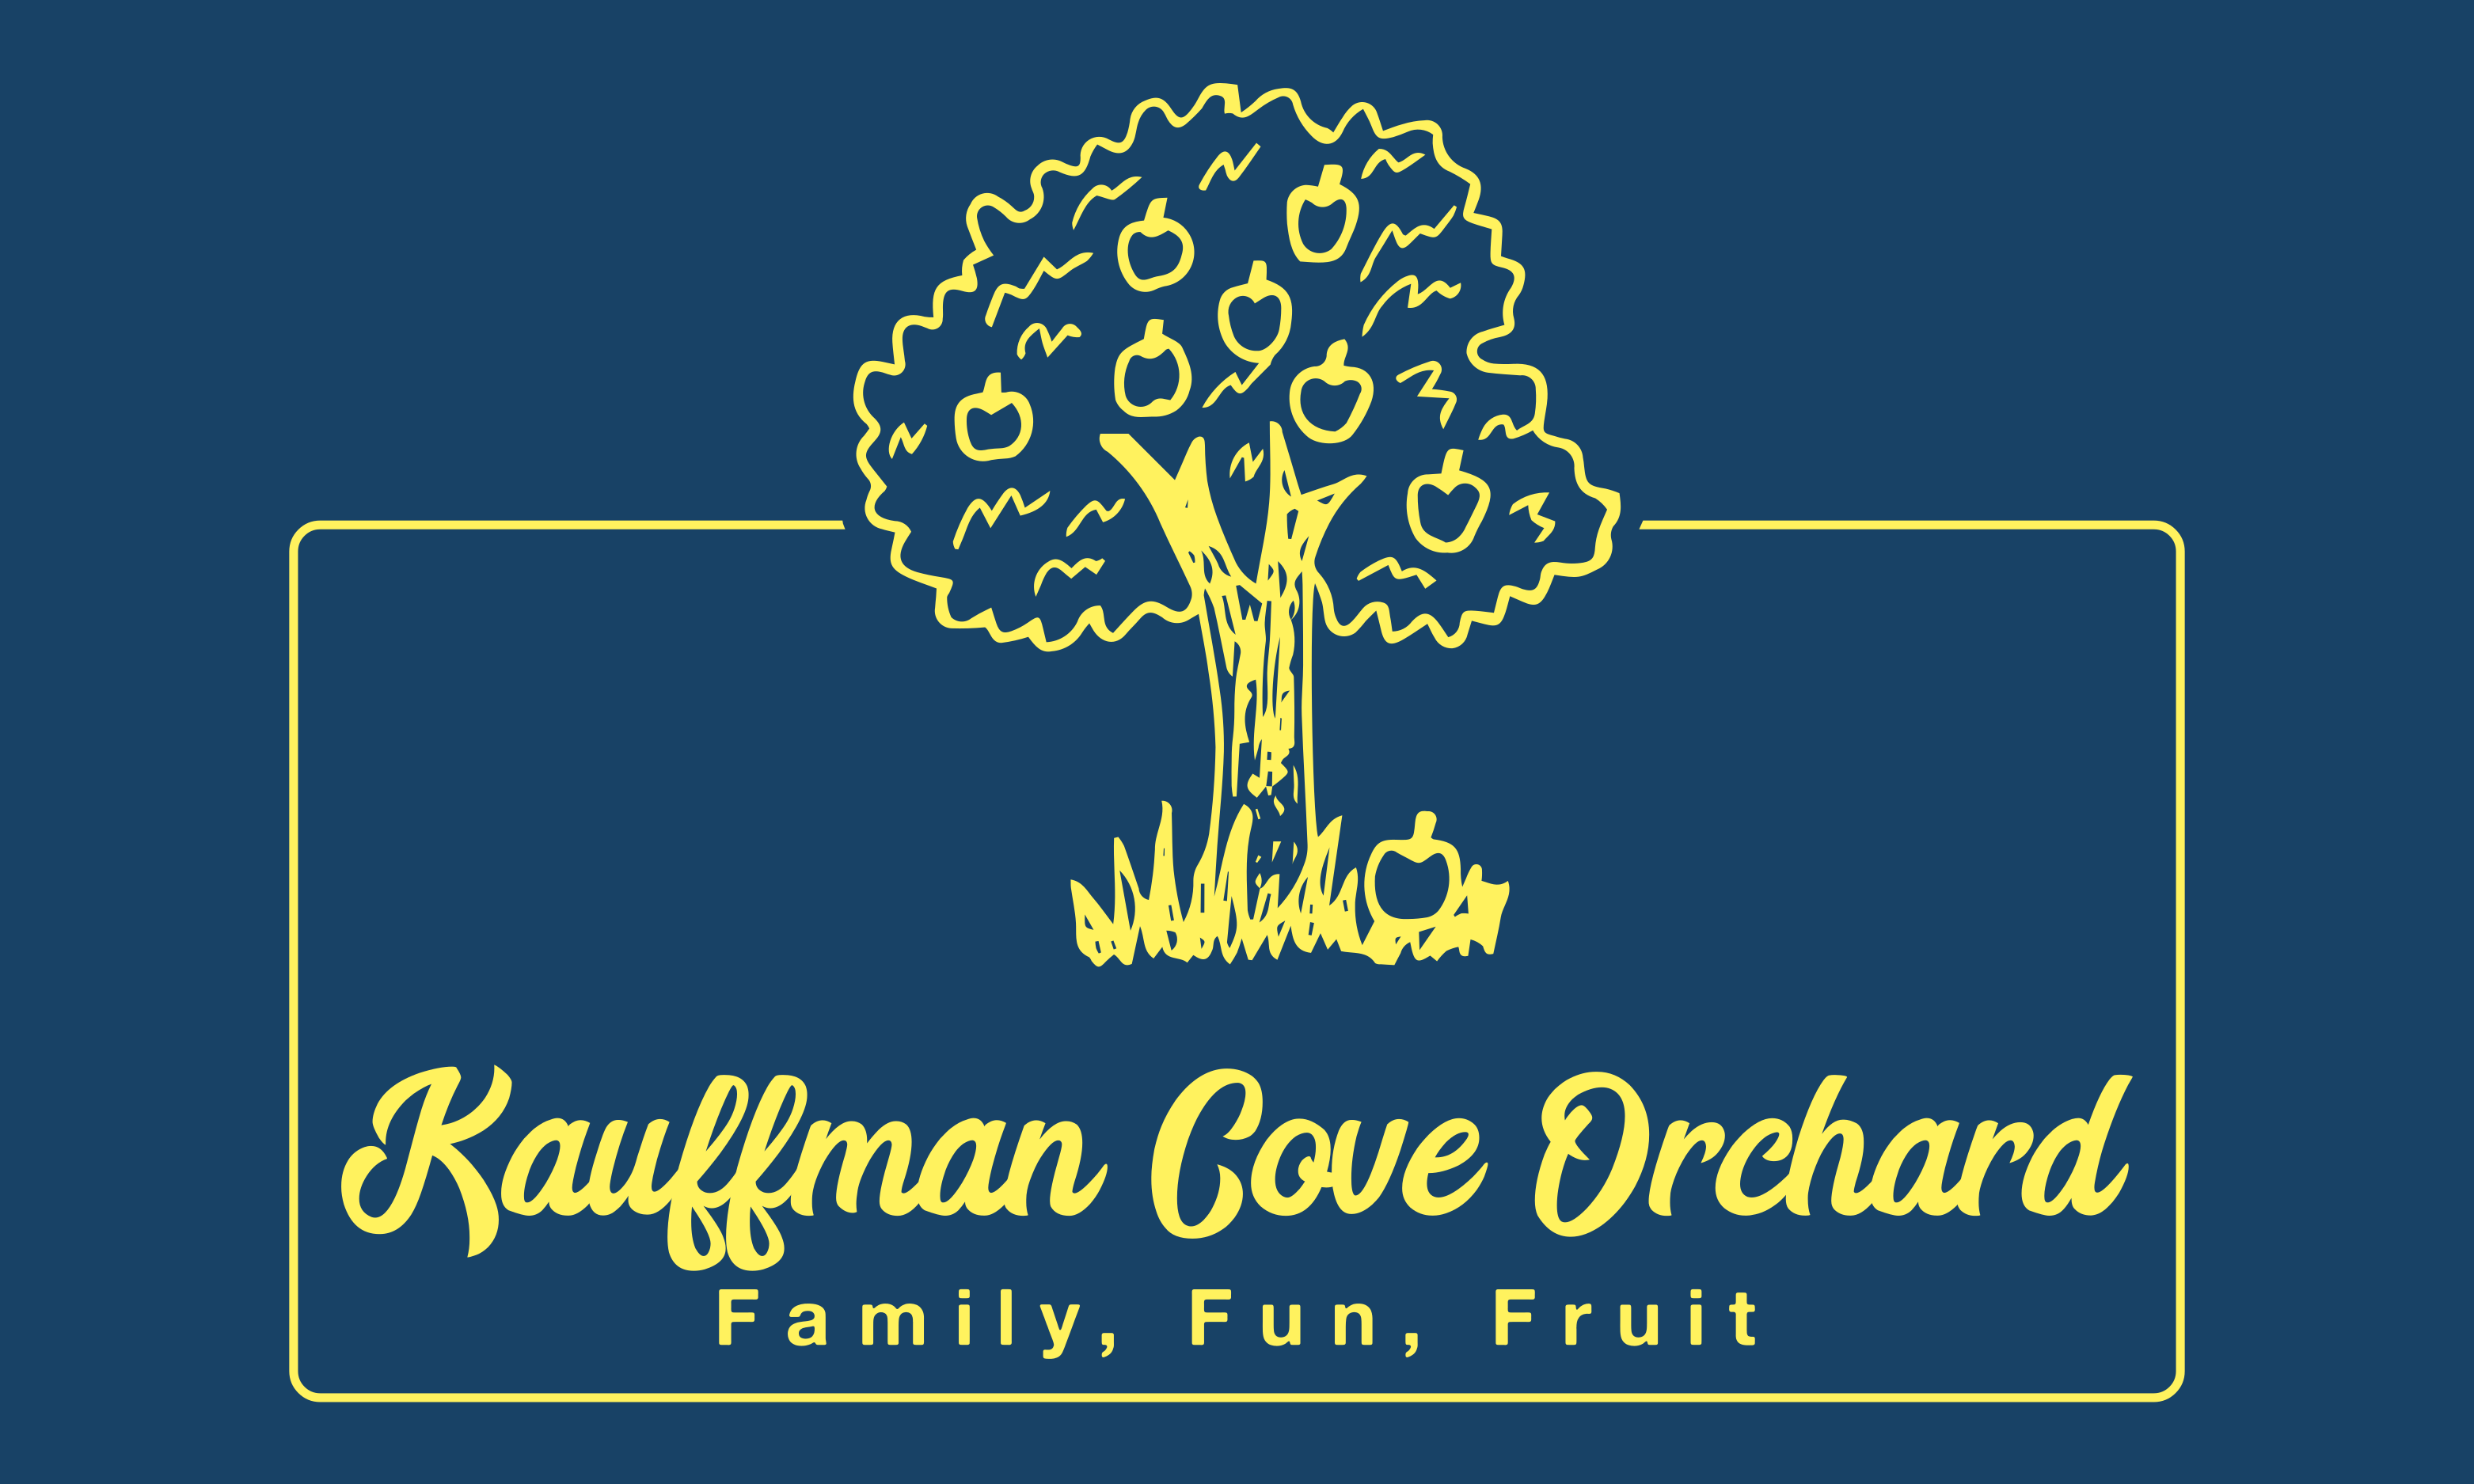 Kauffman Cove Orchard